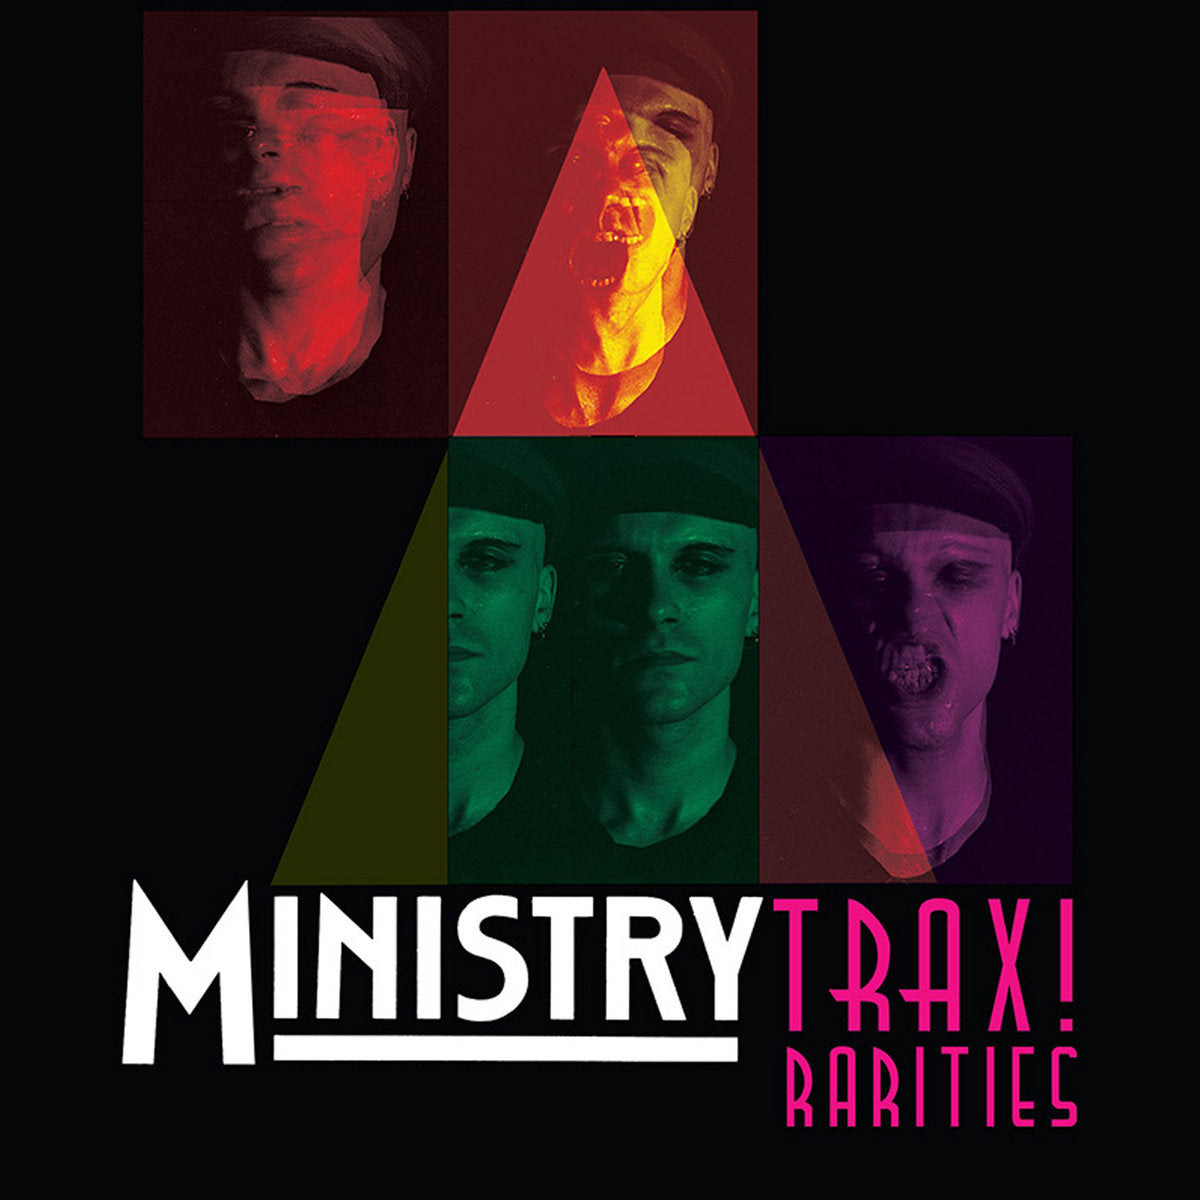 MINISTRY - TRAX! RARITIES Vinyl LP